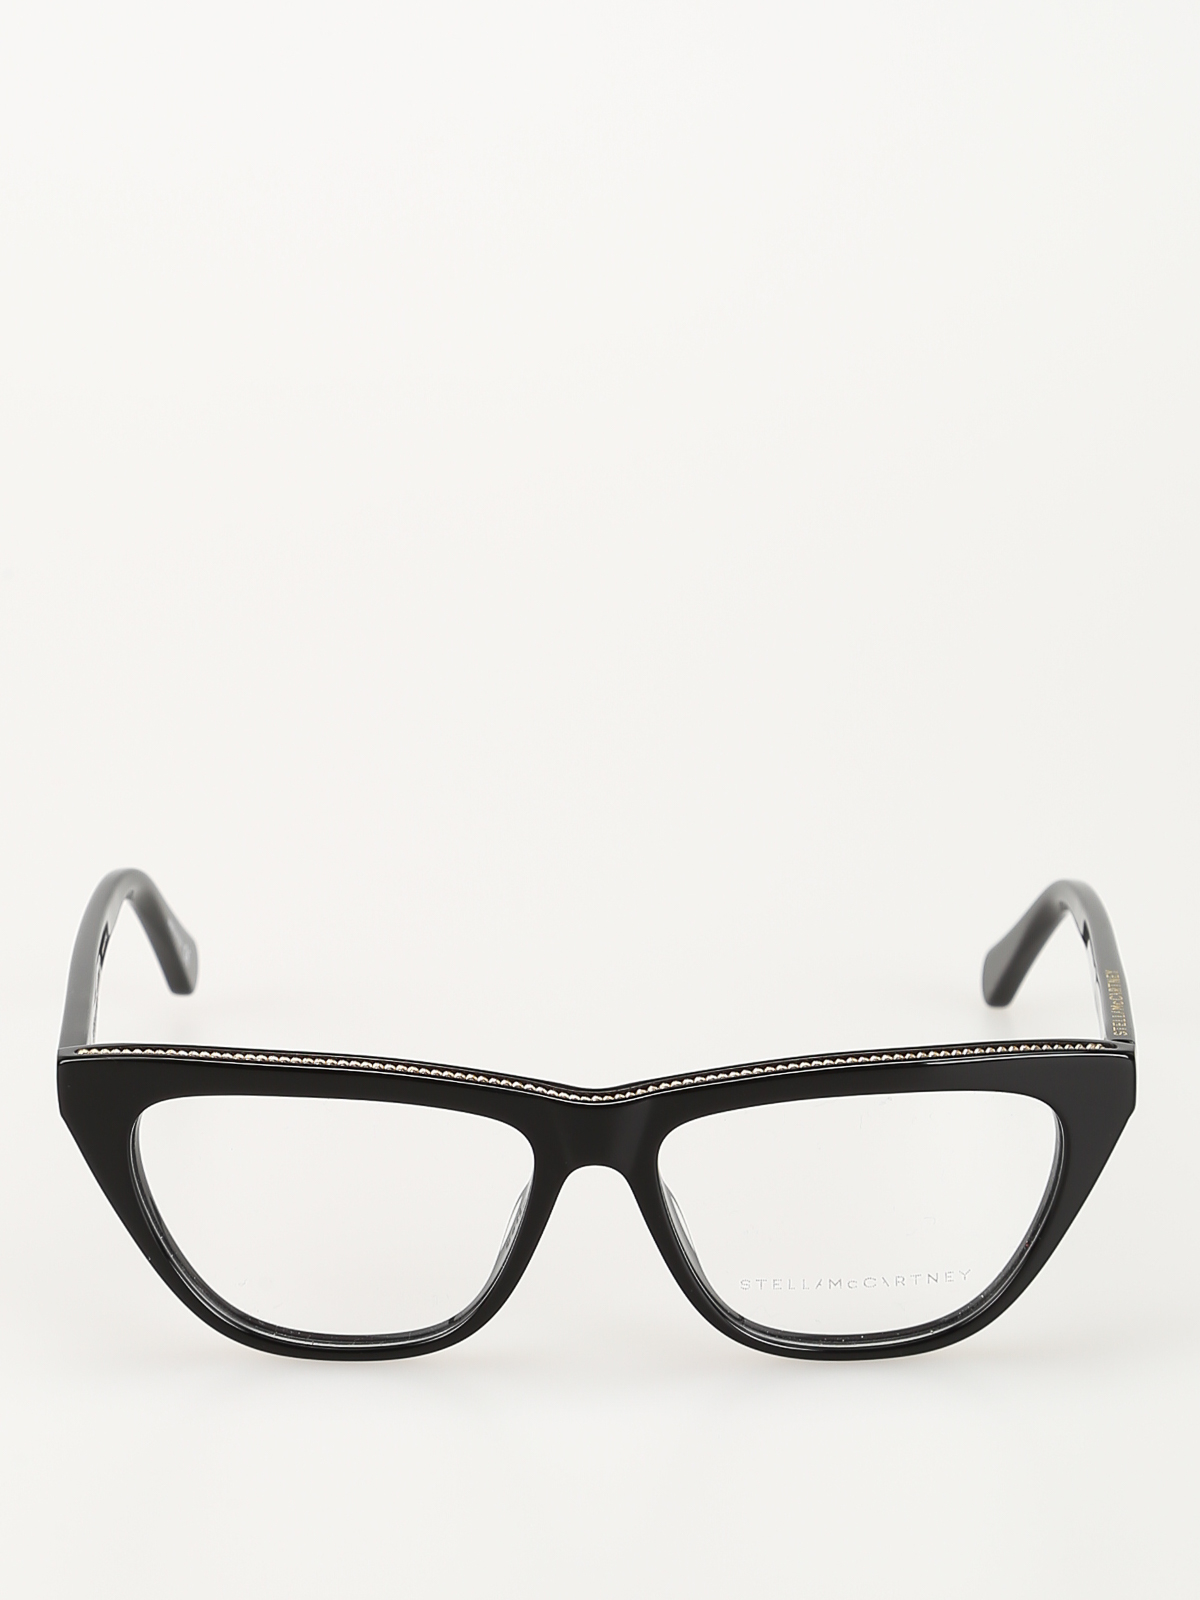 Glasses Stella Mccartney Black Acetate Eyeglasses Sc0191o001 